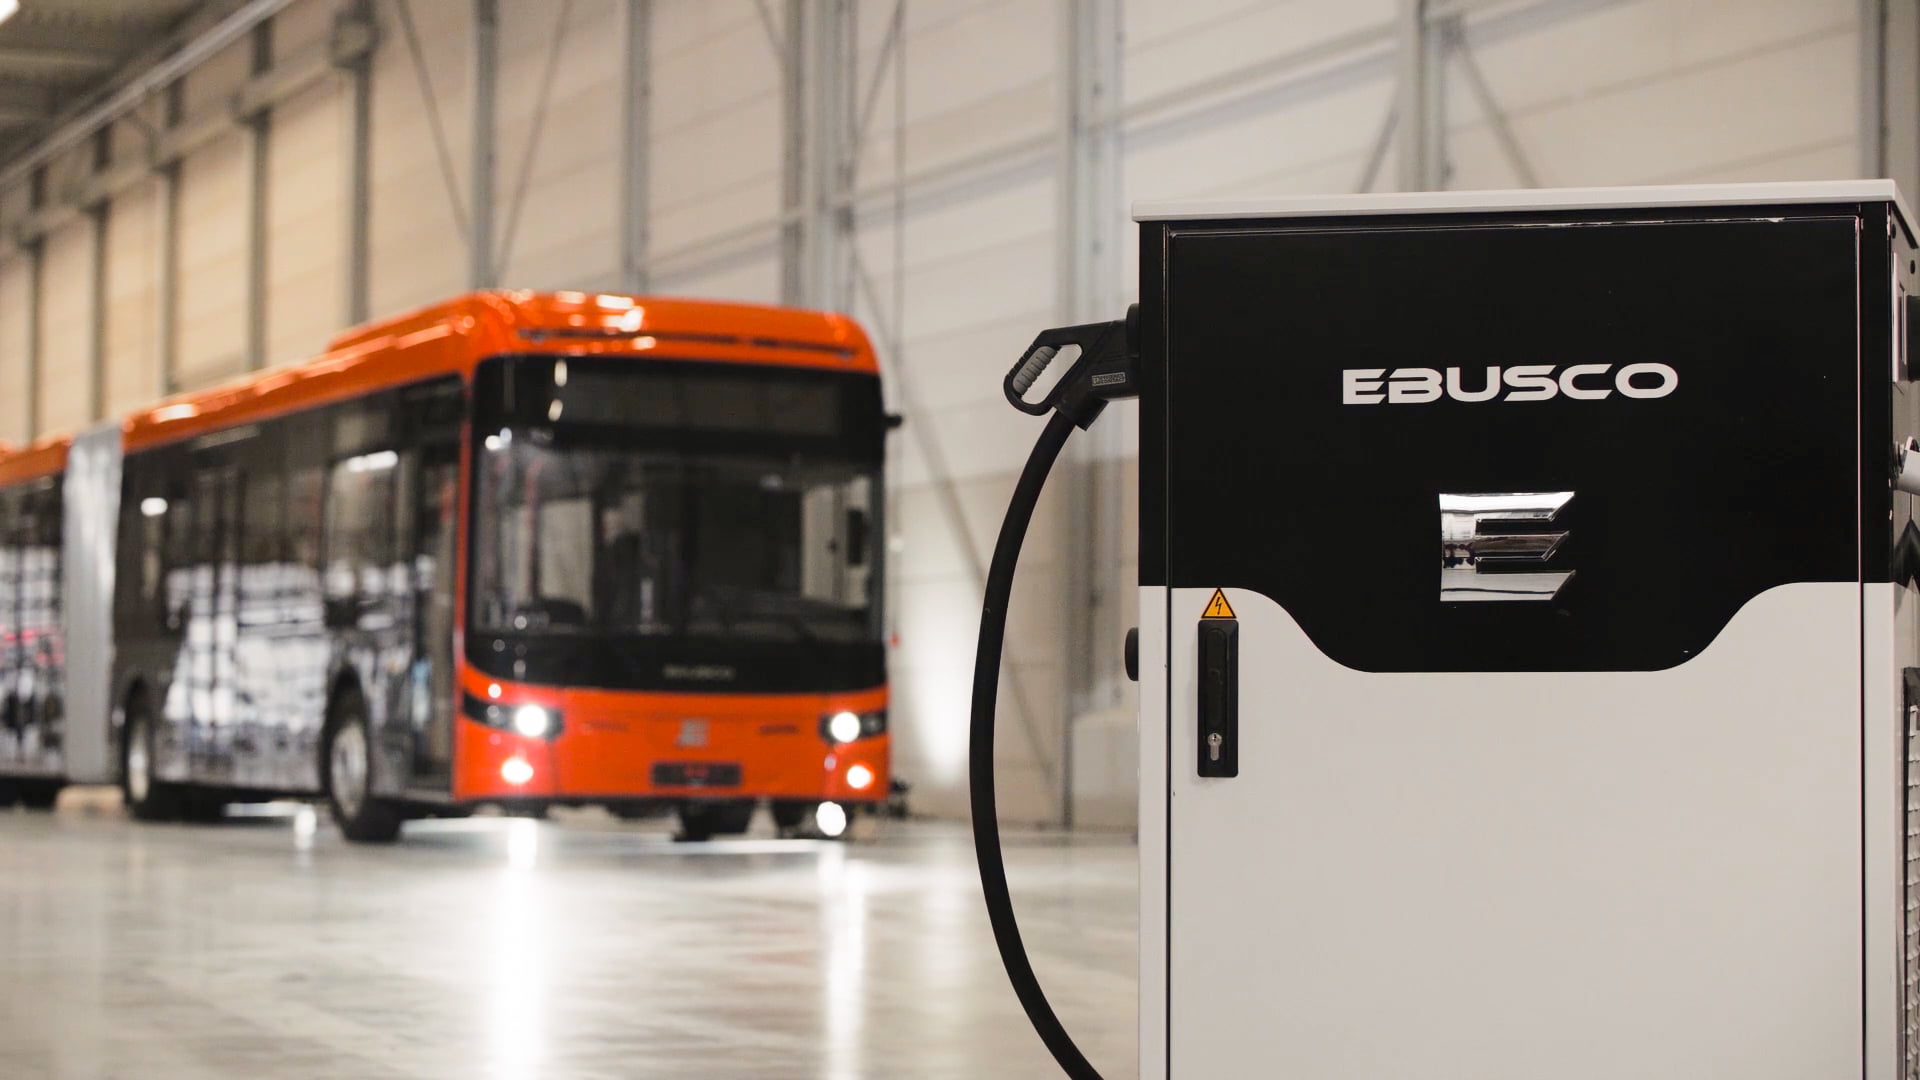 Stadtwerke München expande com ônibus Ebusco